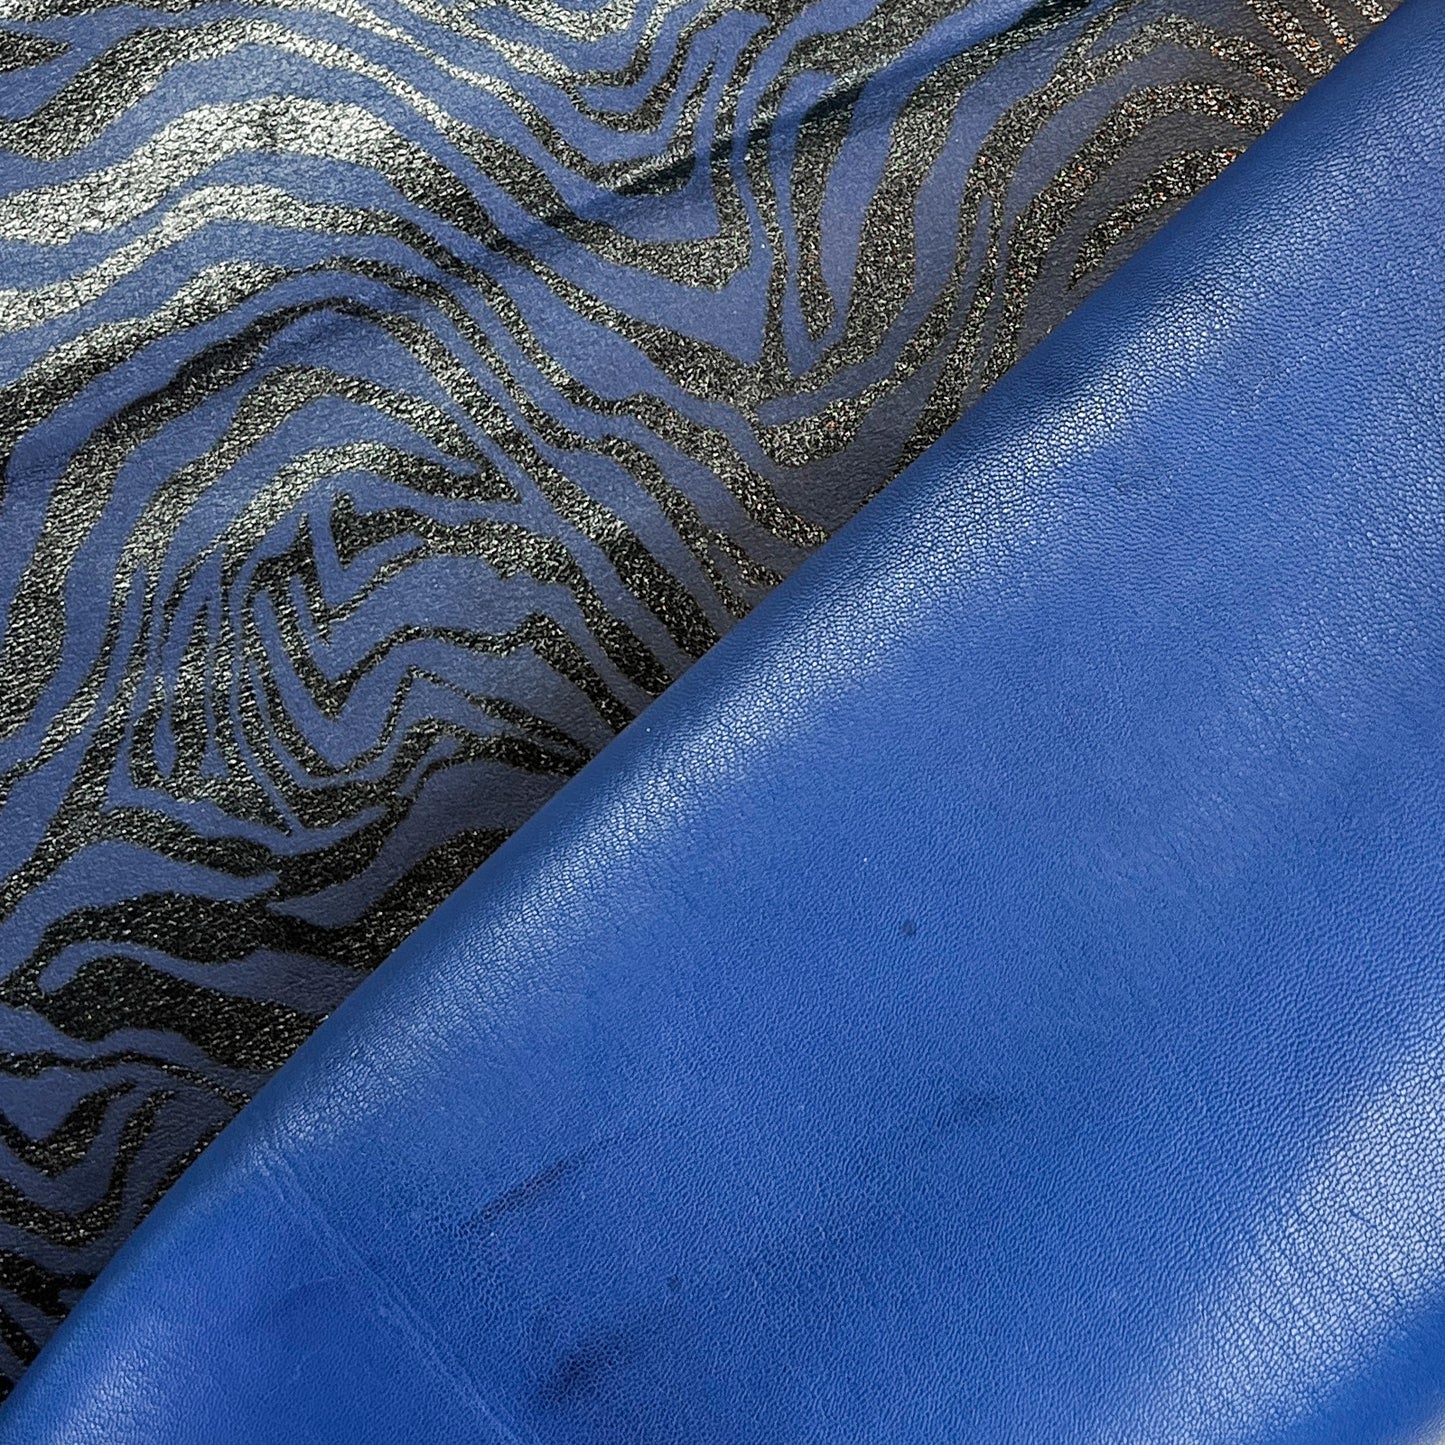 Soft Blue Zebra Print Lambskin 0.7-1.2mm/1.75-3oz / BLUE ZEBRA 1446